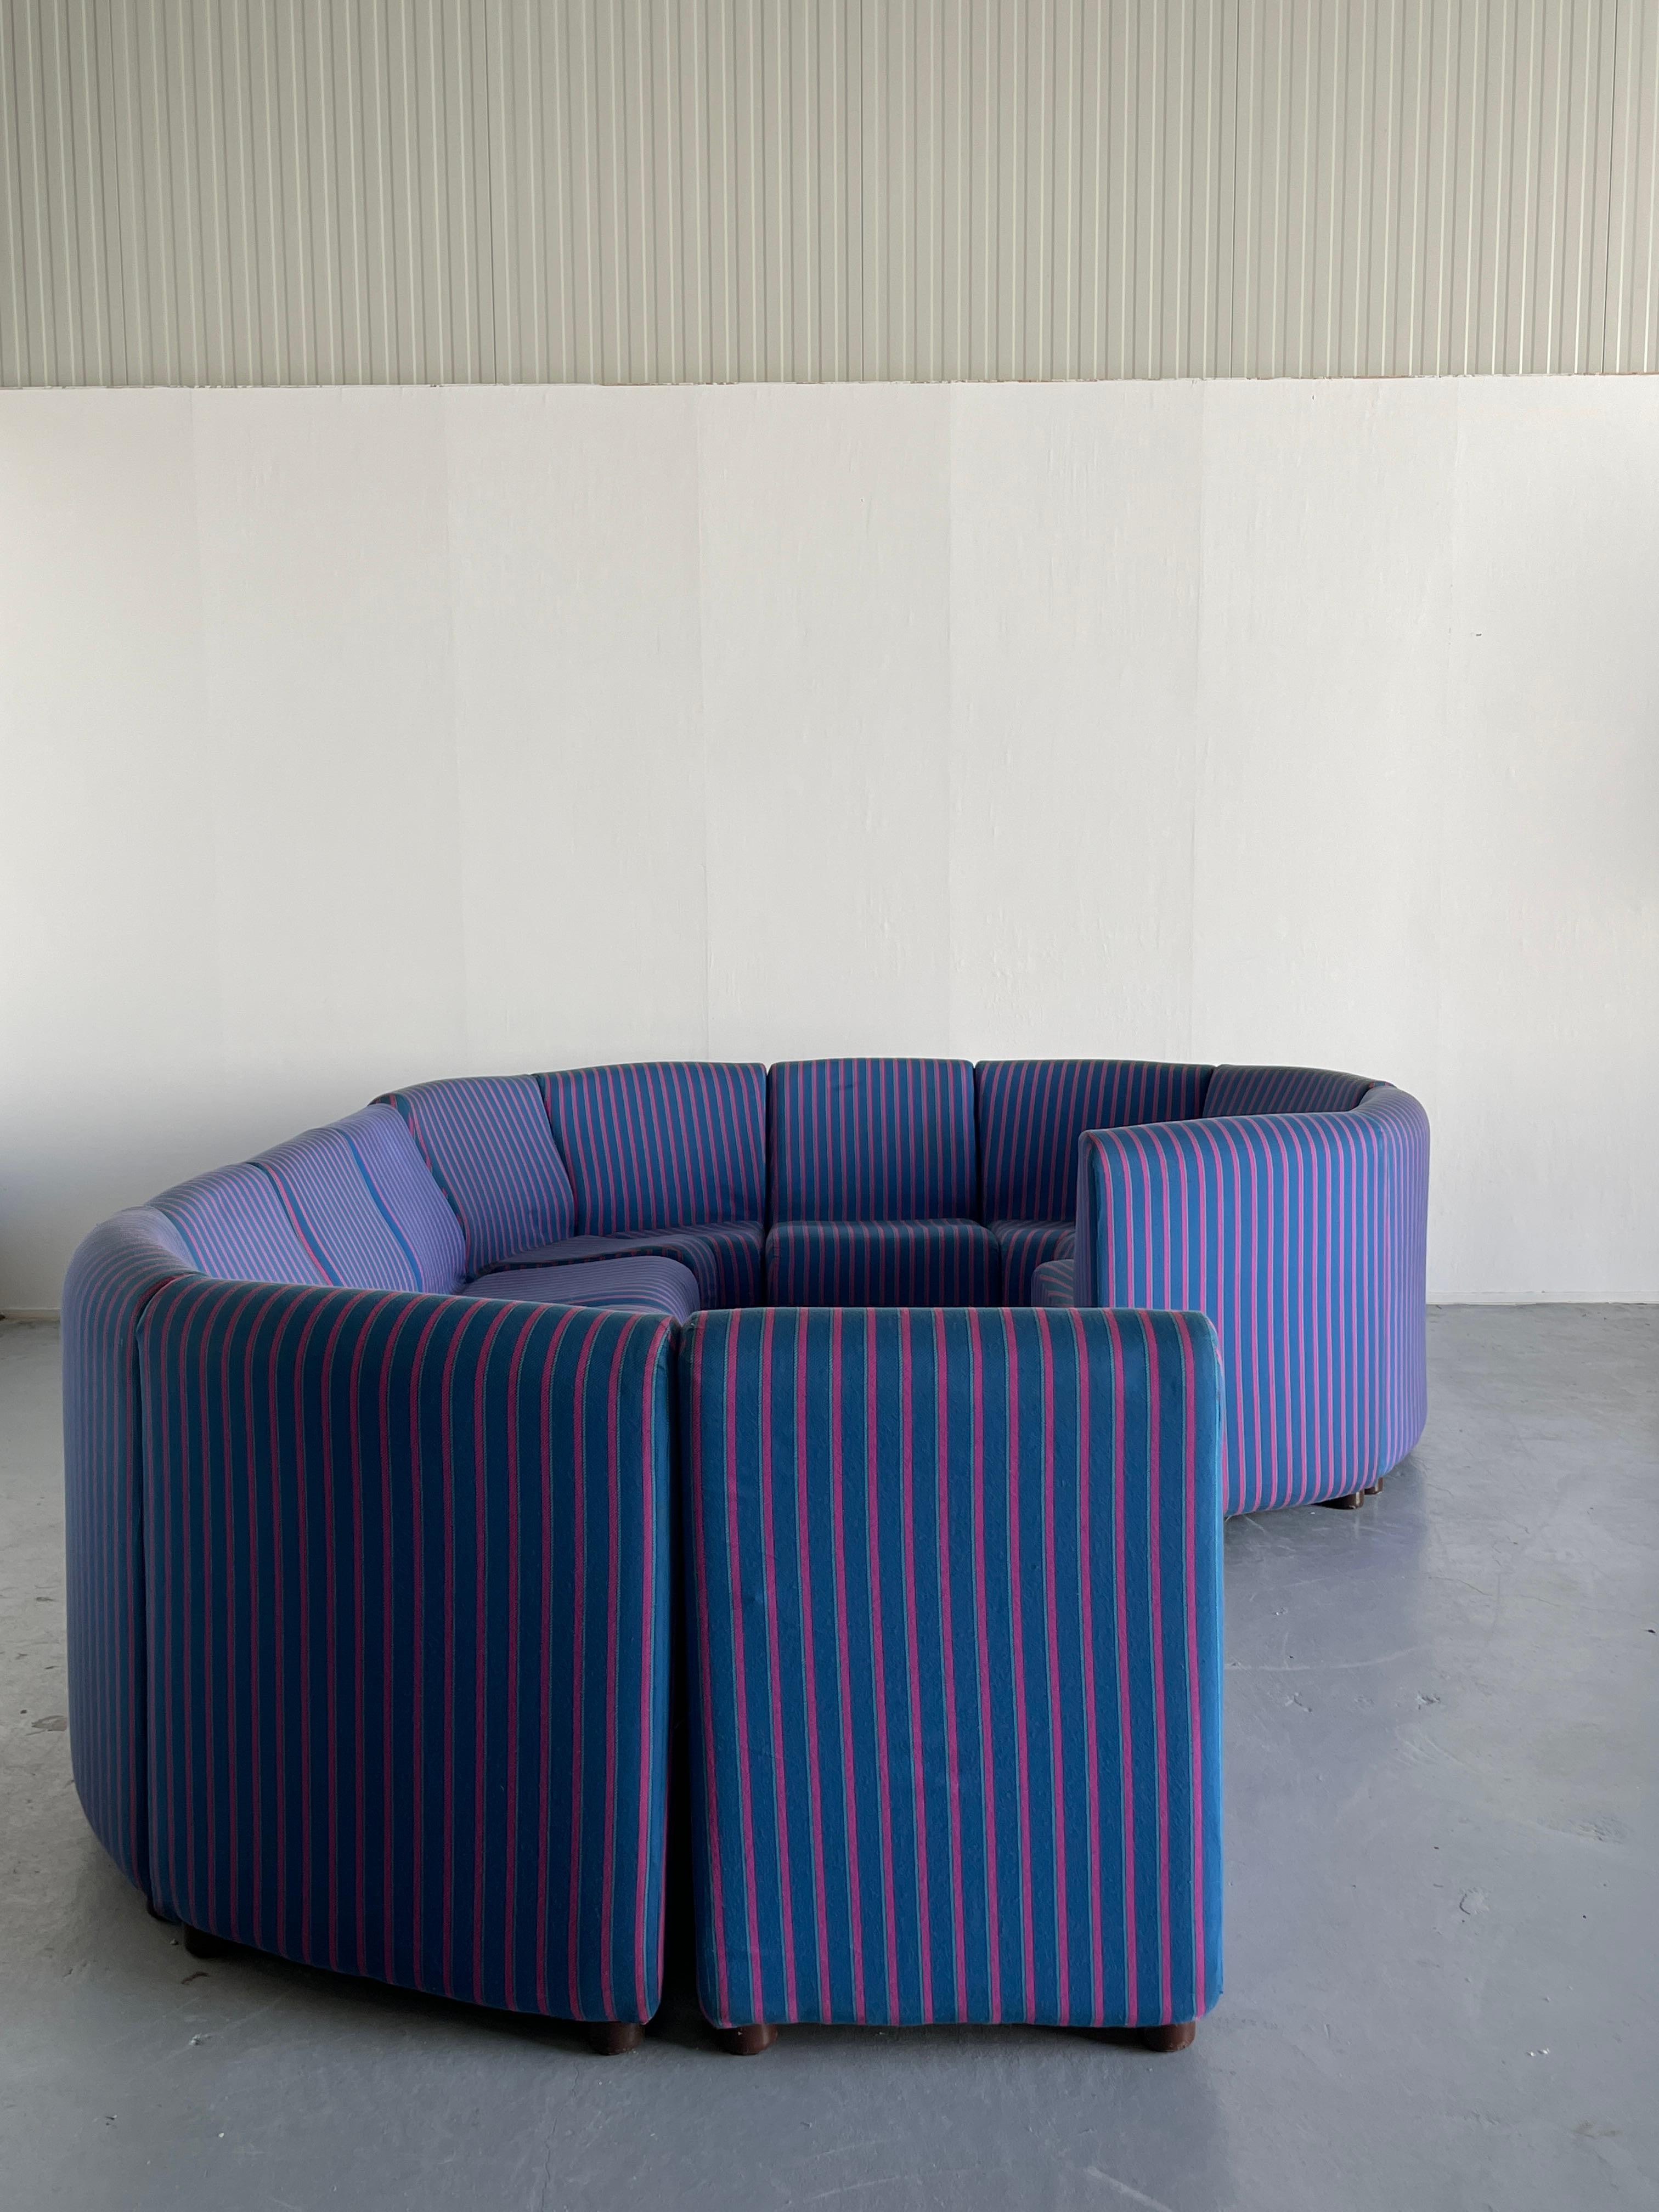 Late 20th Century Large Italian Mid-Century-Modern Serpentine Modular Sofa, 13 Pieces, 1970s